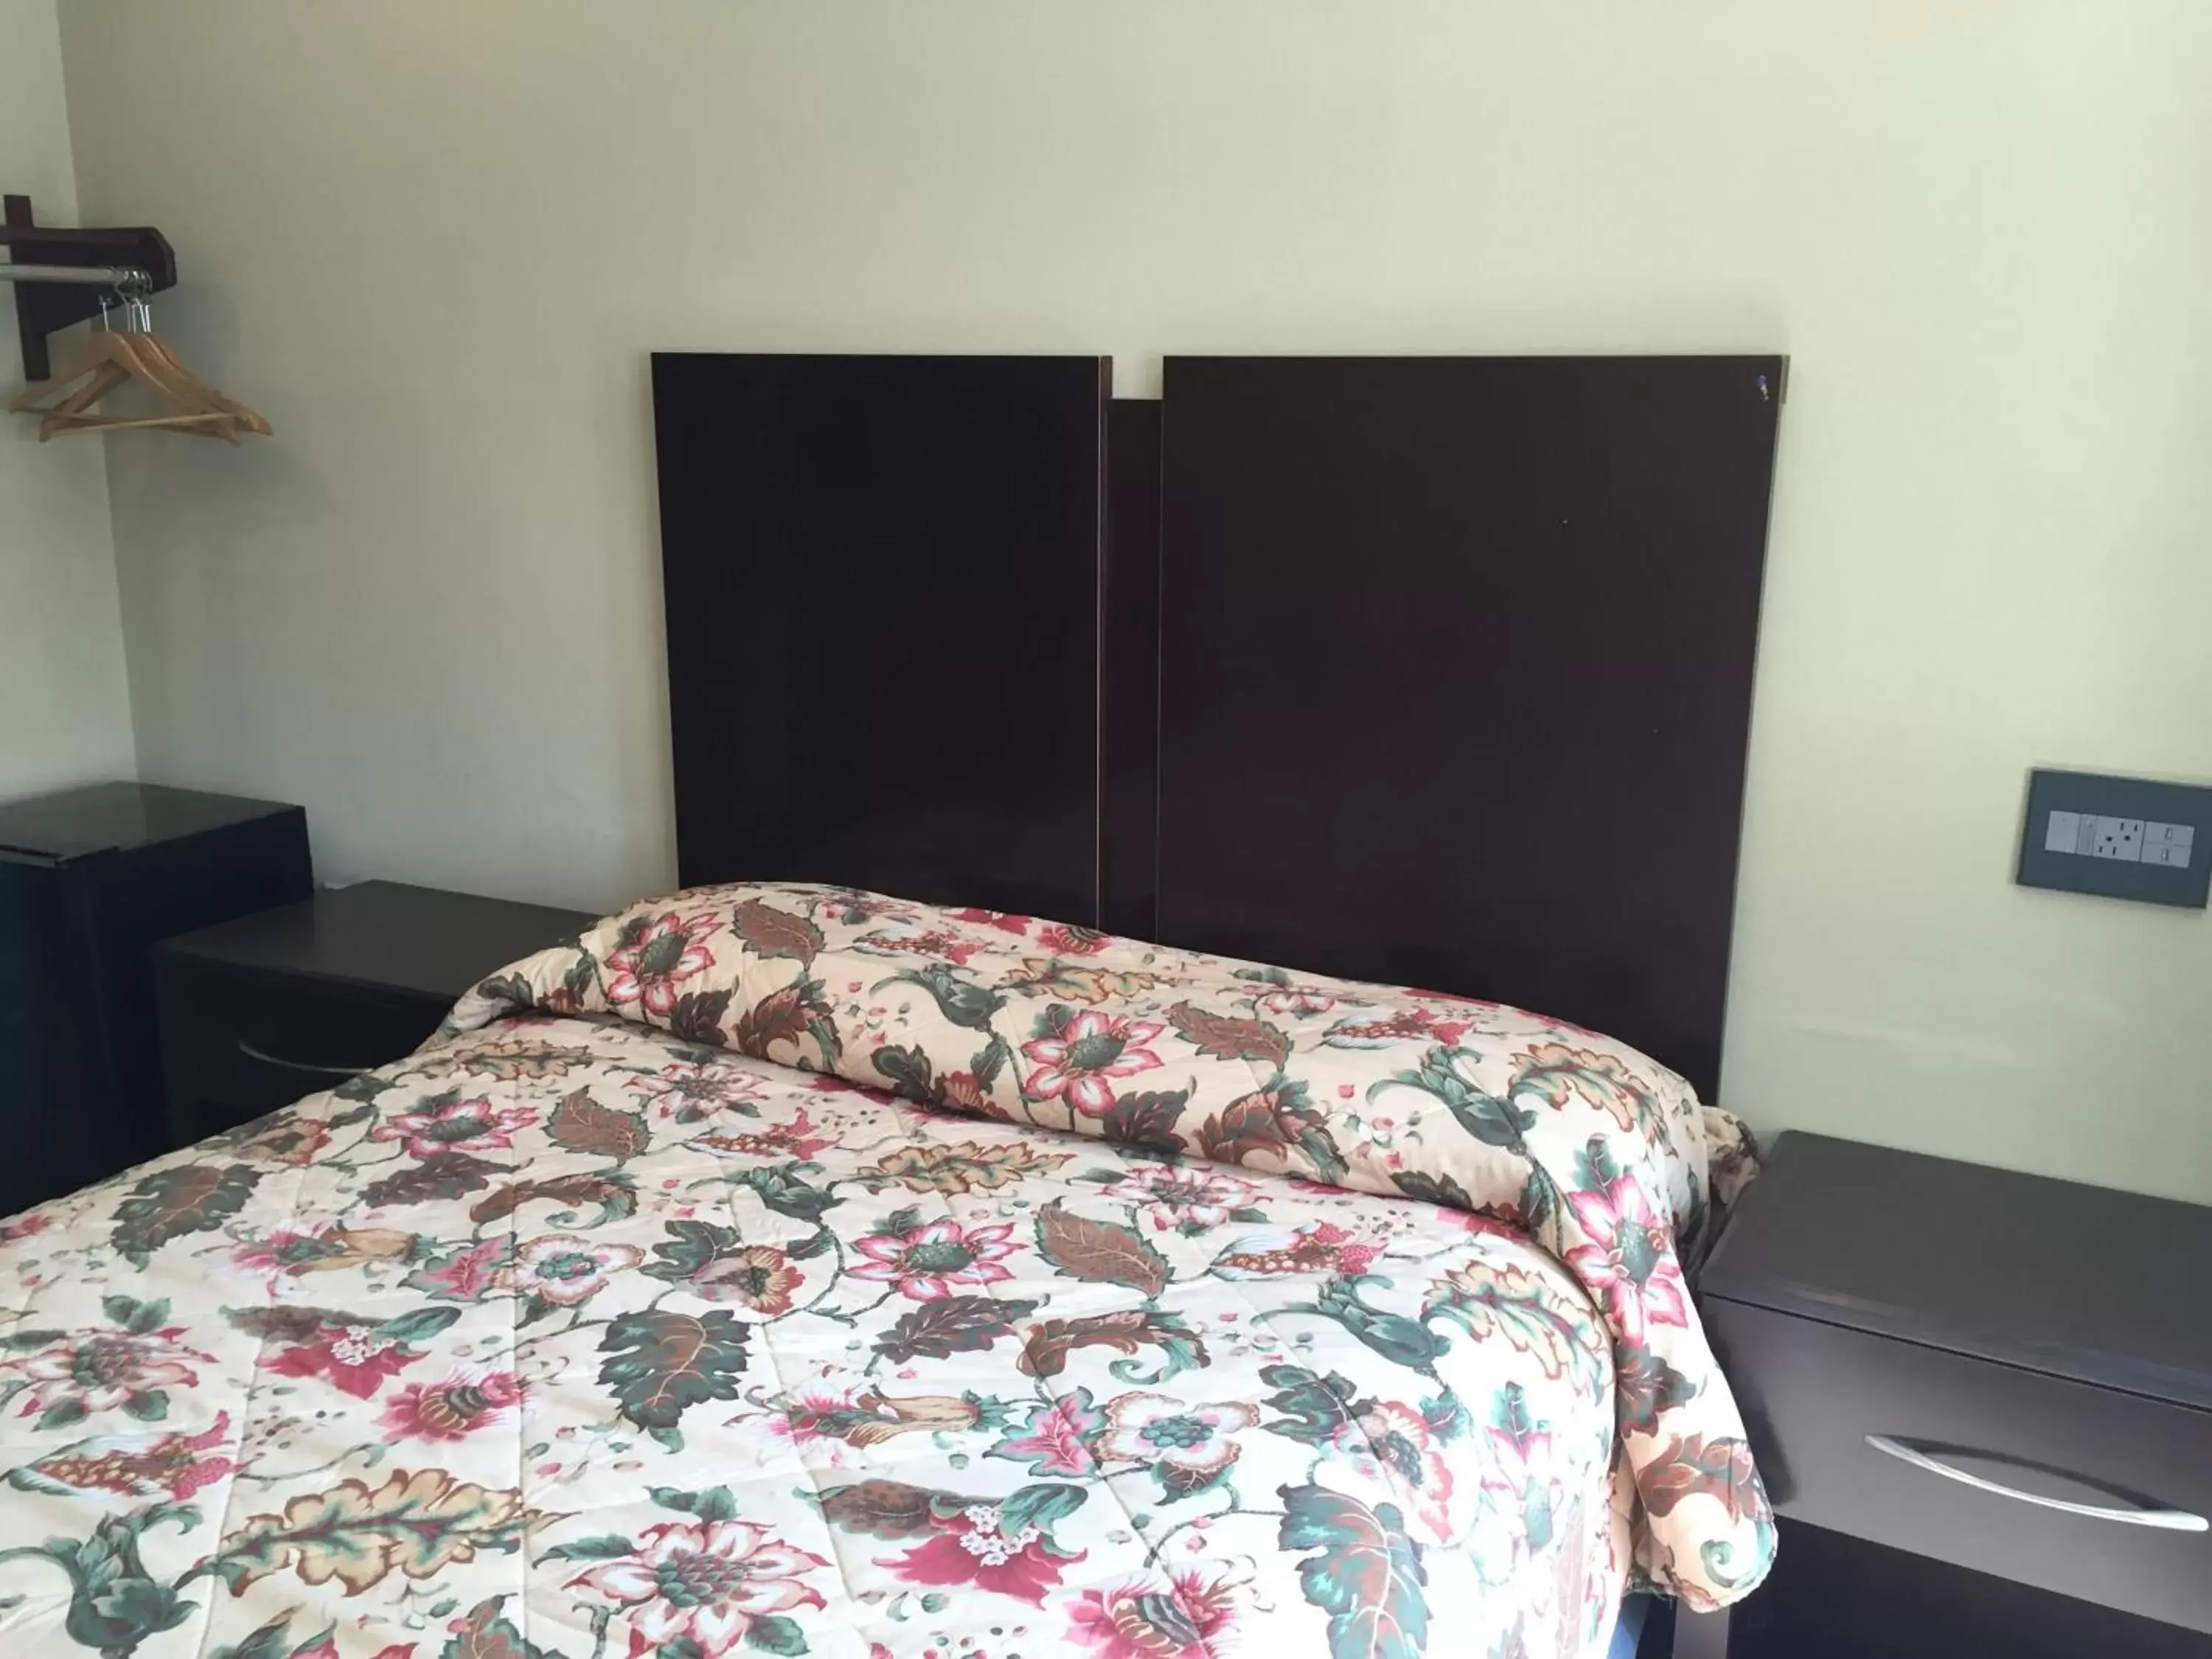 Bed, Room Photo in Deluxe Inn Redwood City